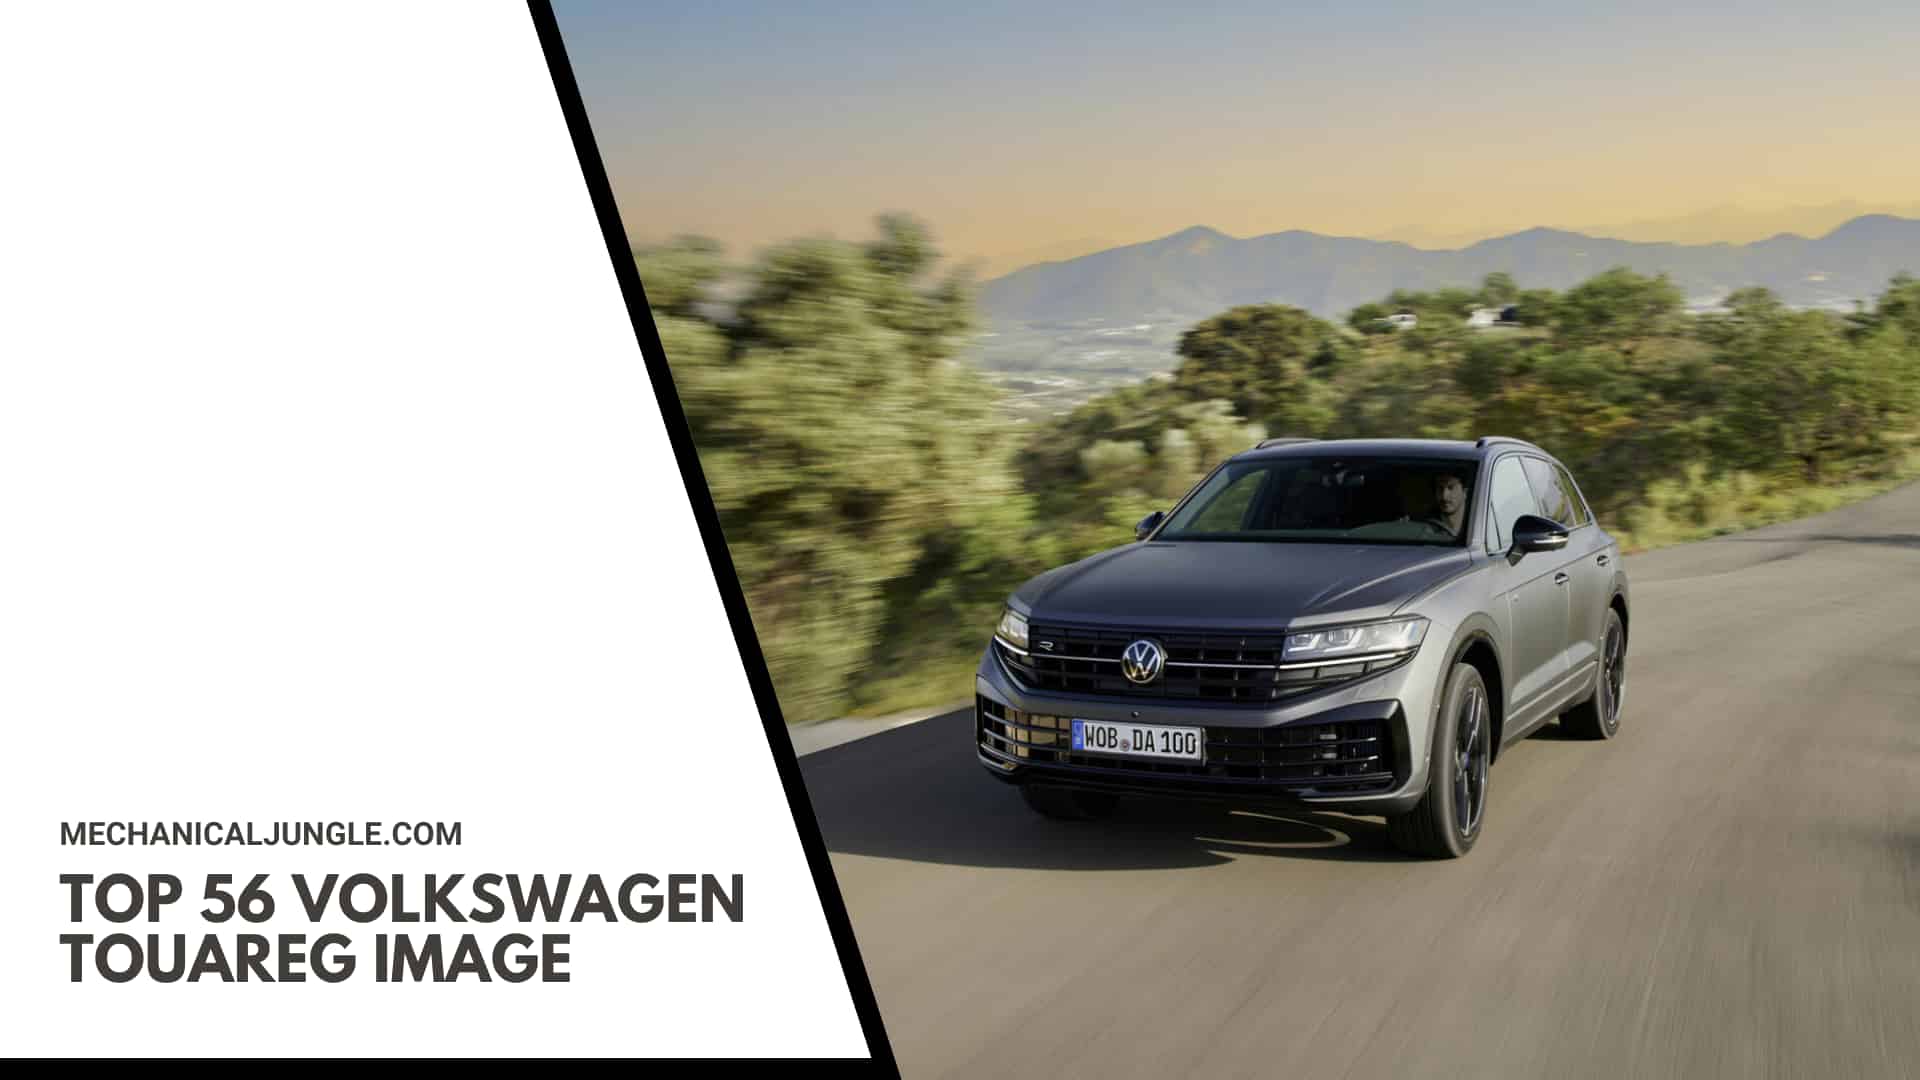 Top 56 Volkswagen Touareg Image